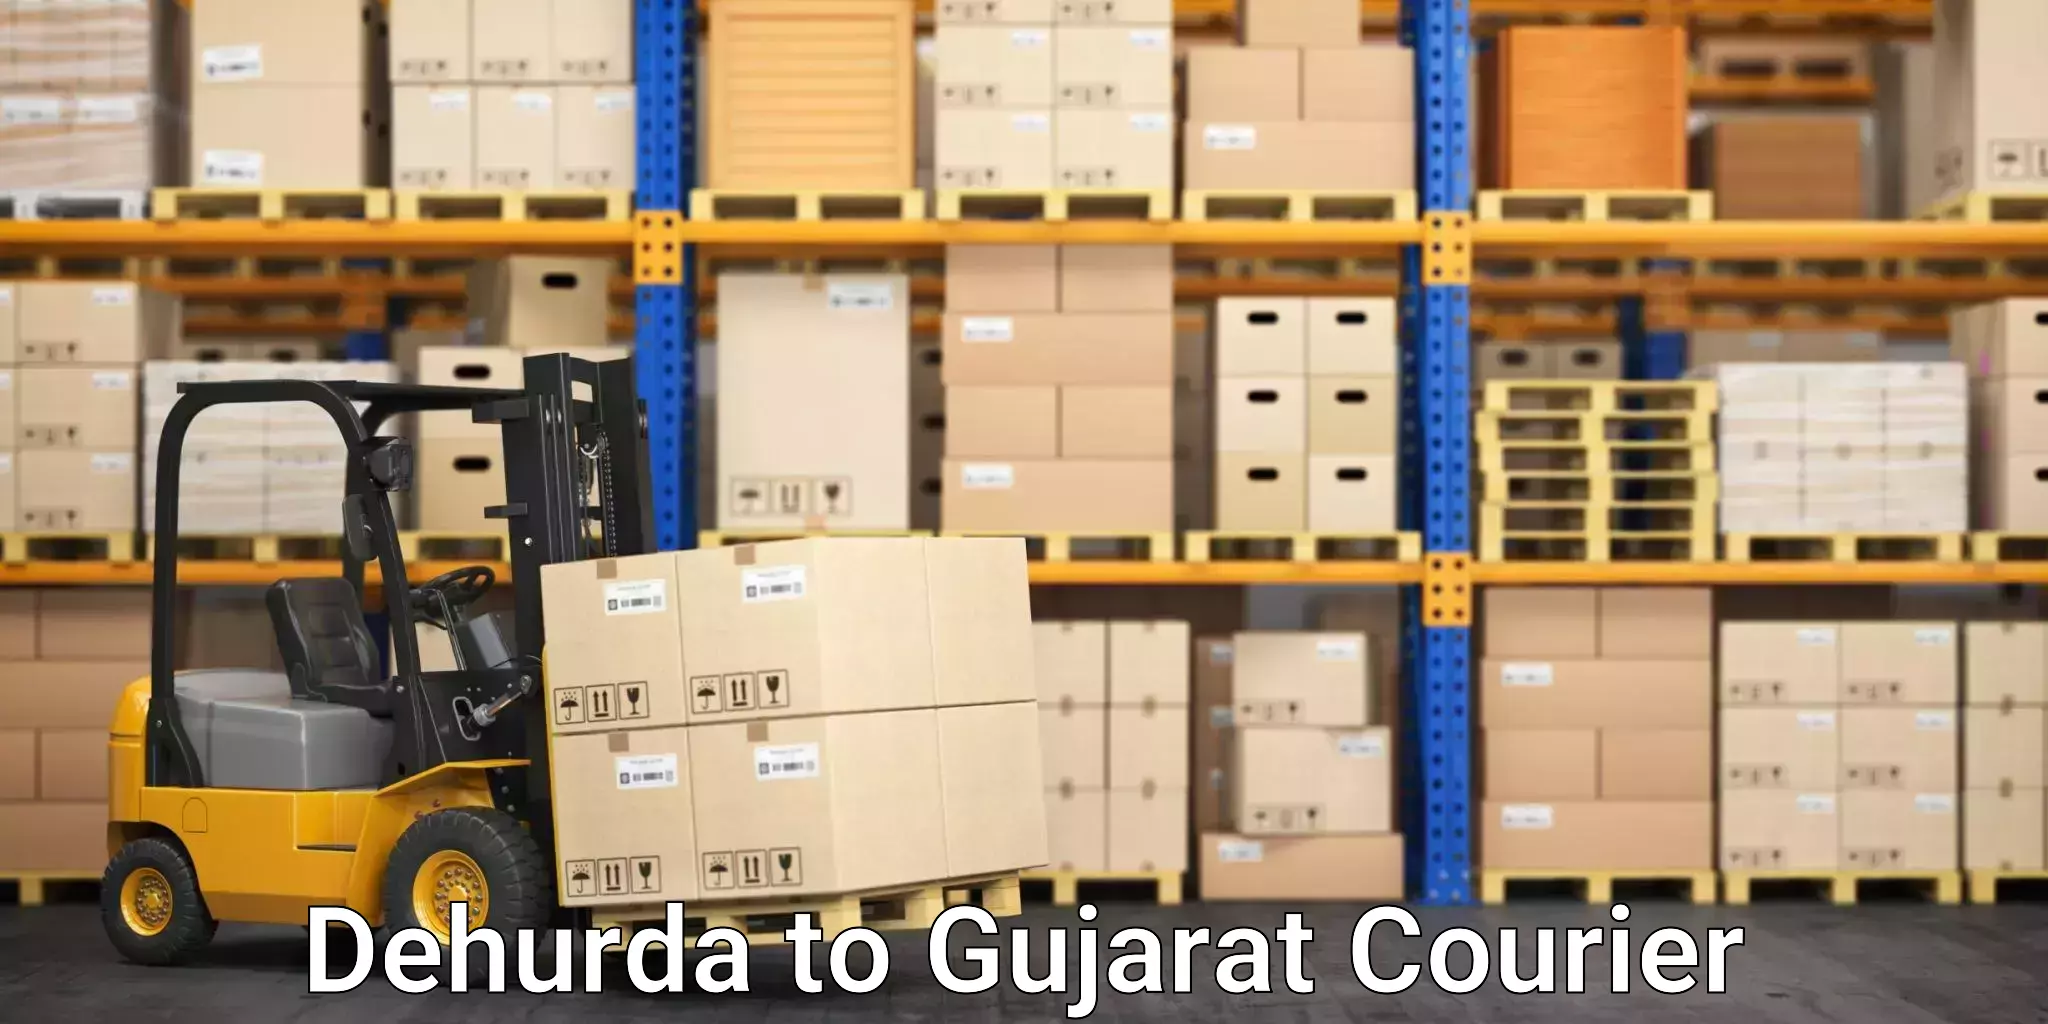 24-hour courier service Dehurda to Mendarda